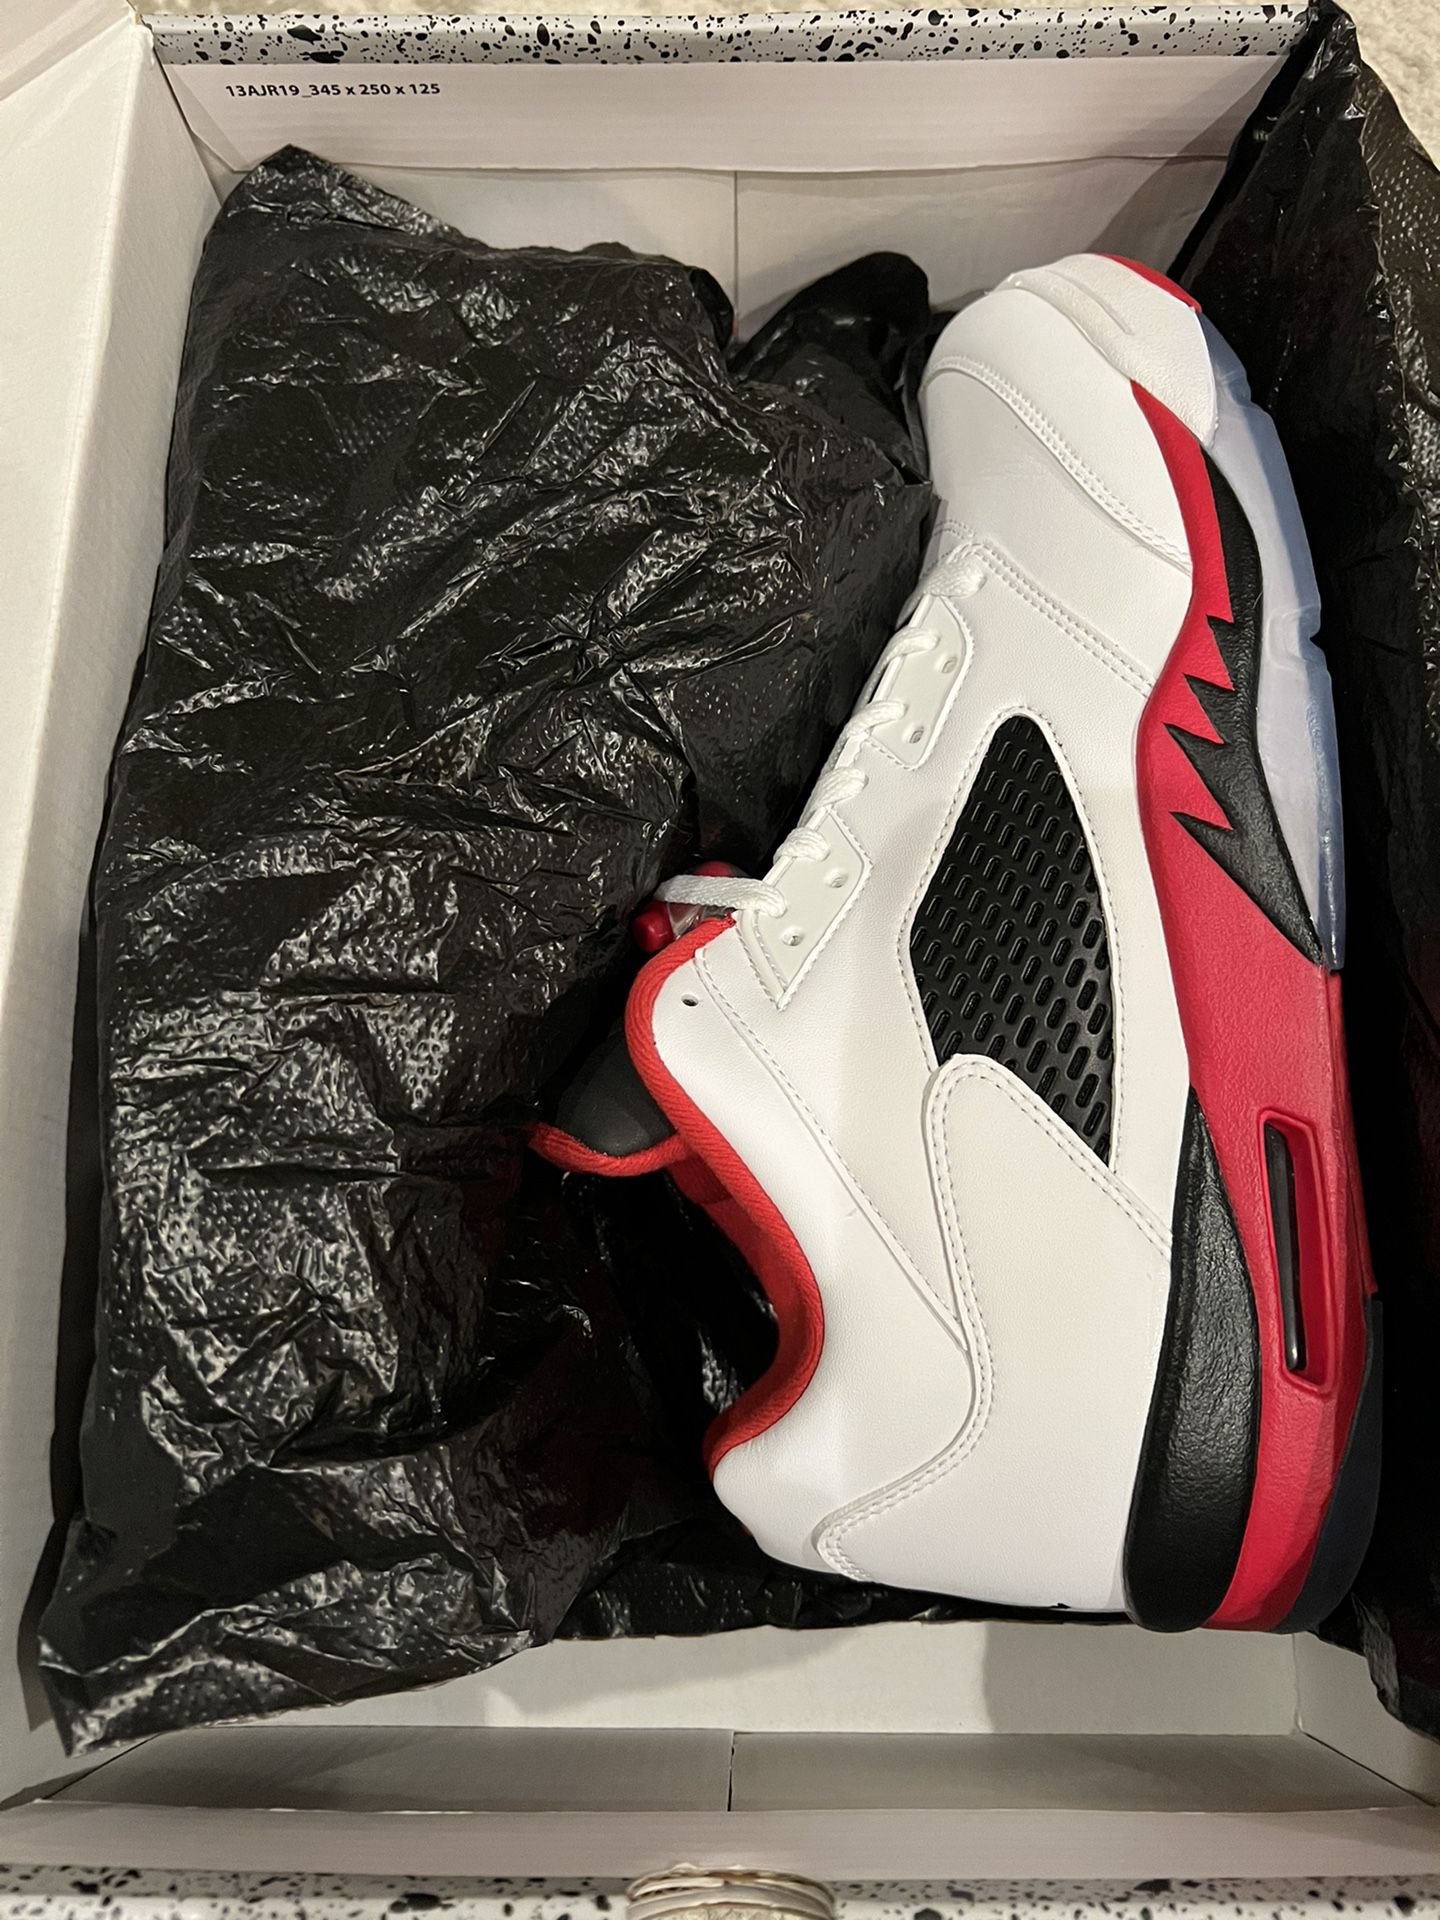 Jordan 5 Retro Low ▫️ Fire Red ▫️ Size 11